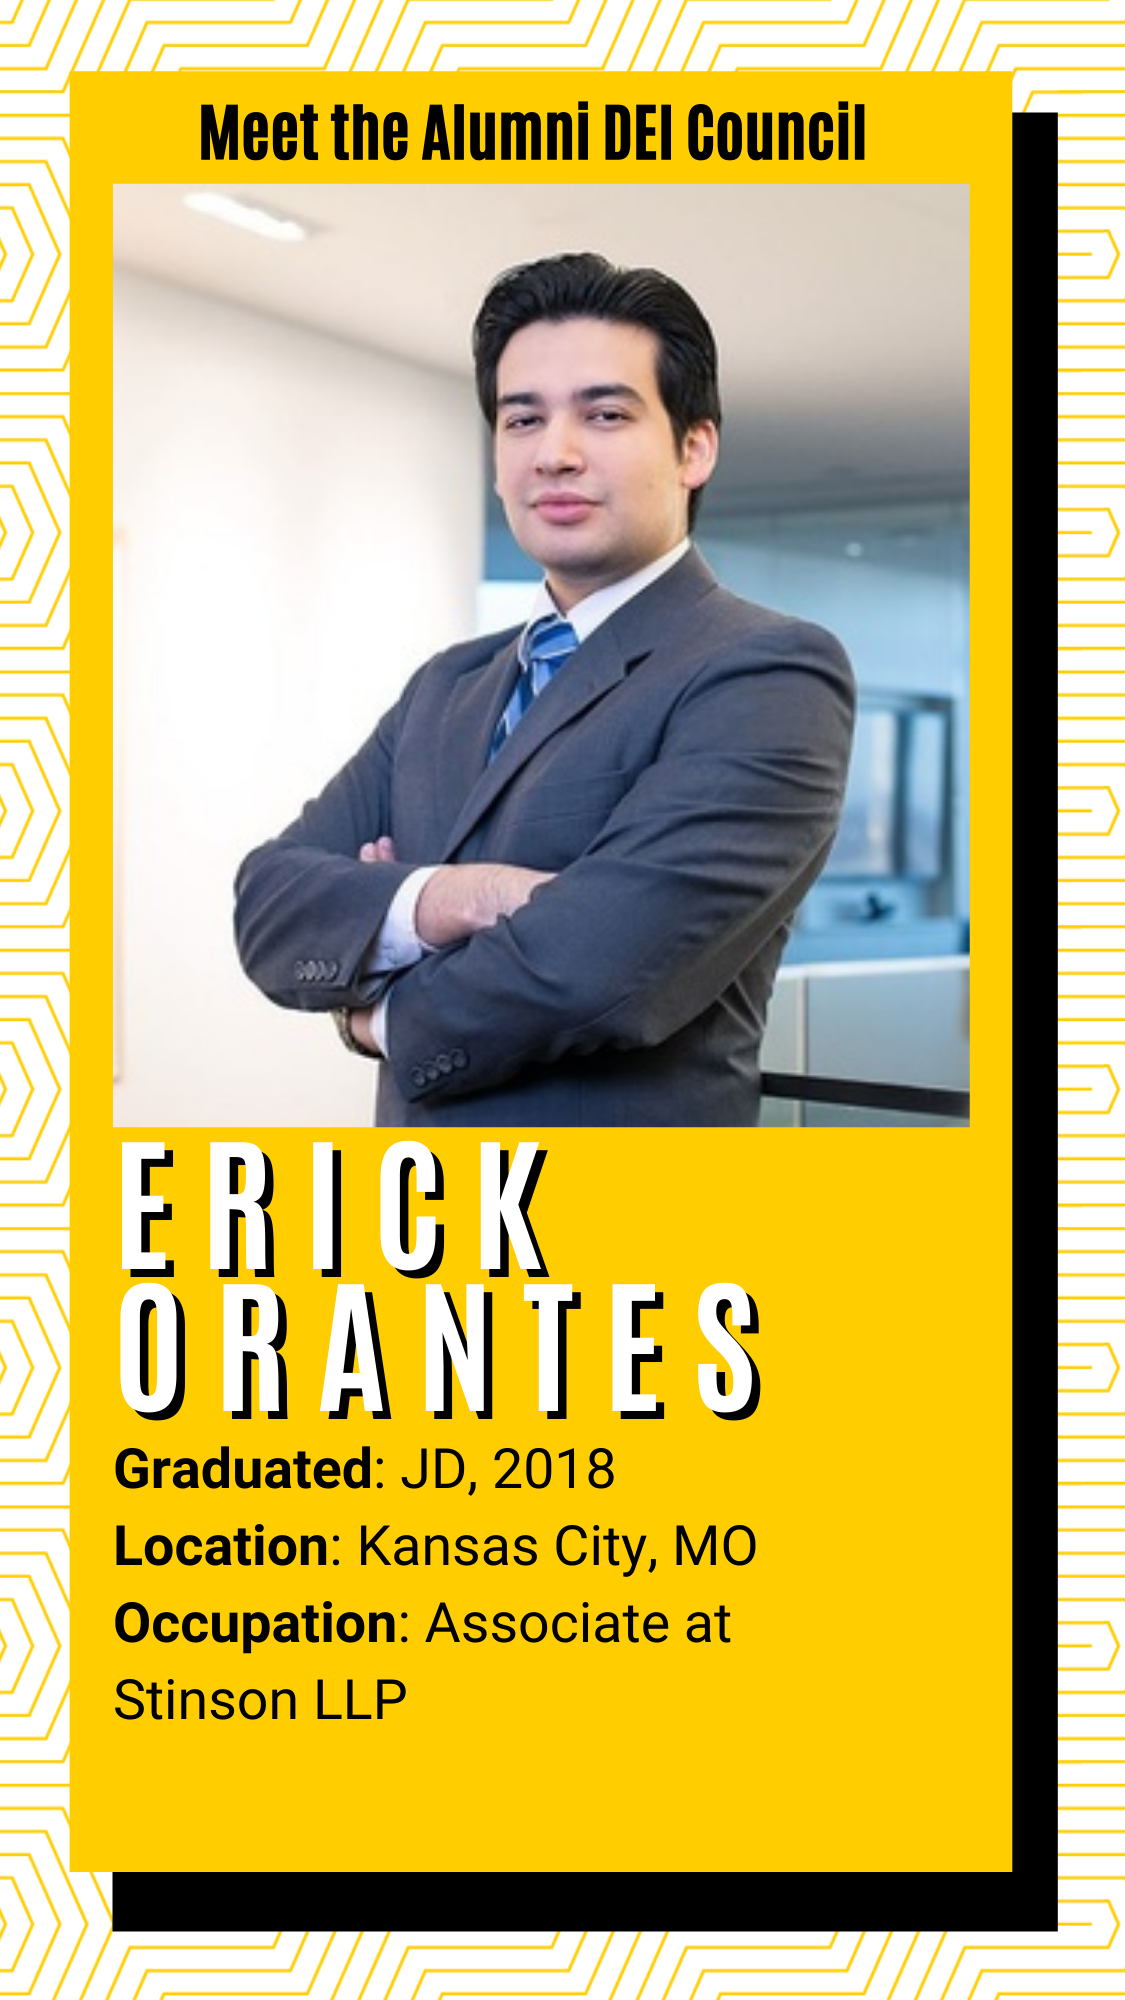 Meet the alumni DEI Council - Erick Orantes